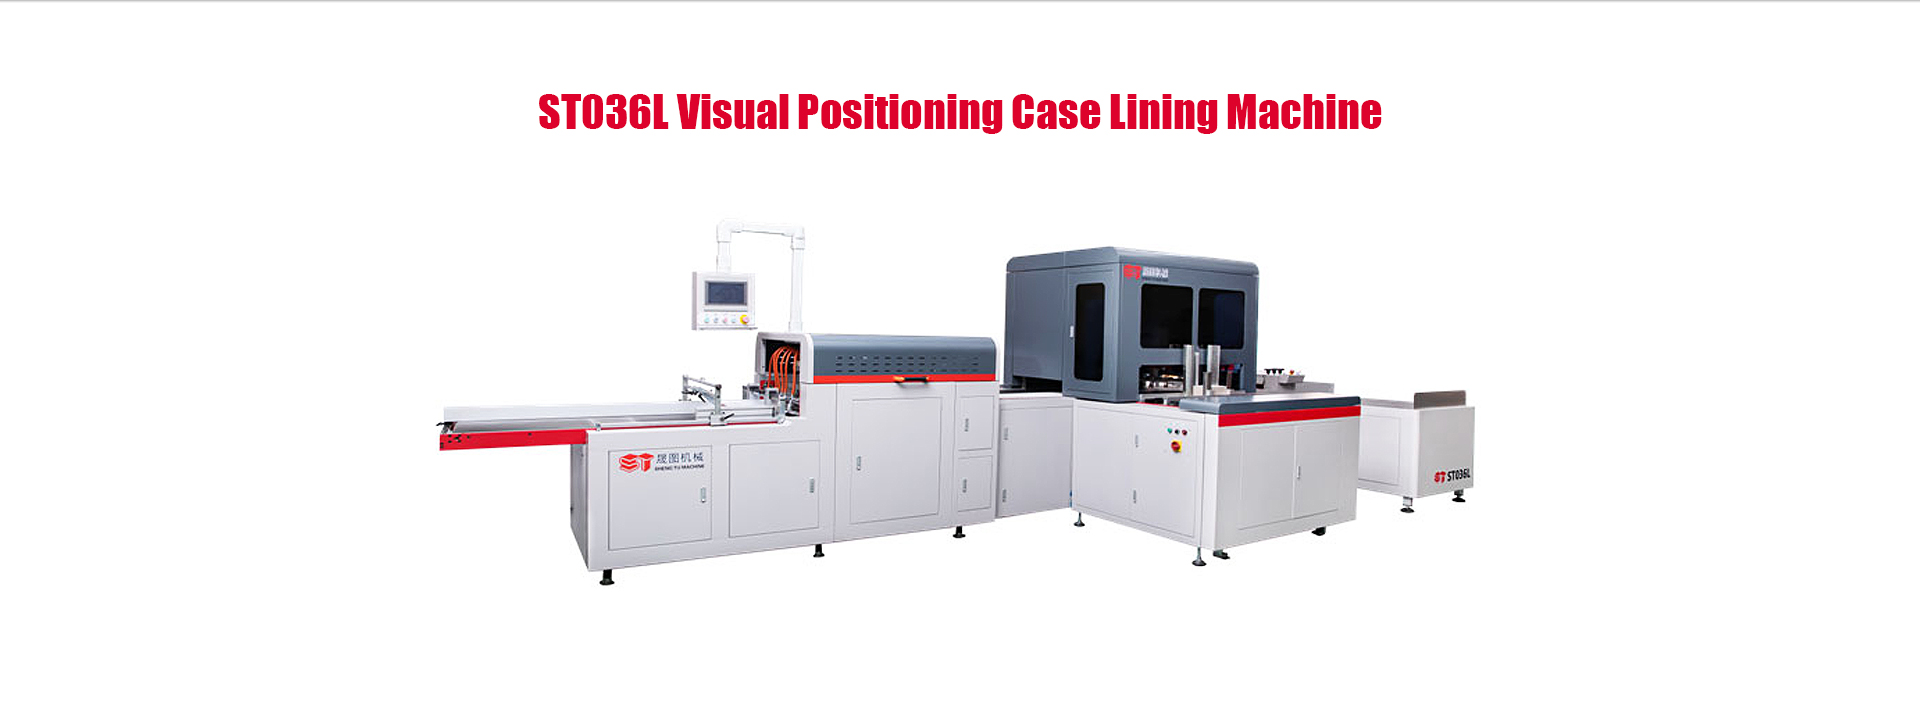 Visual Positioning Case Lining Machine